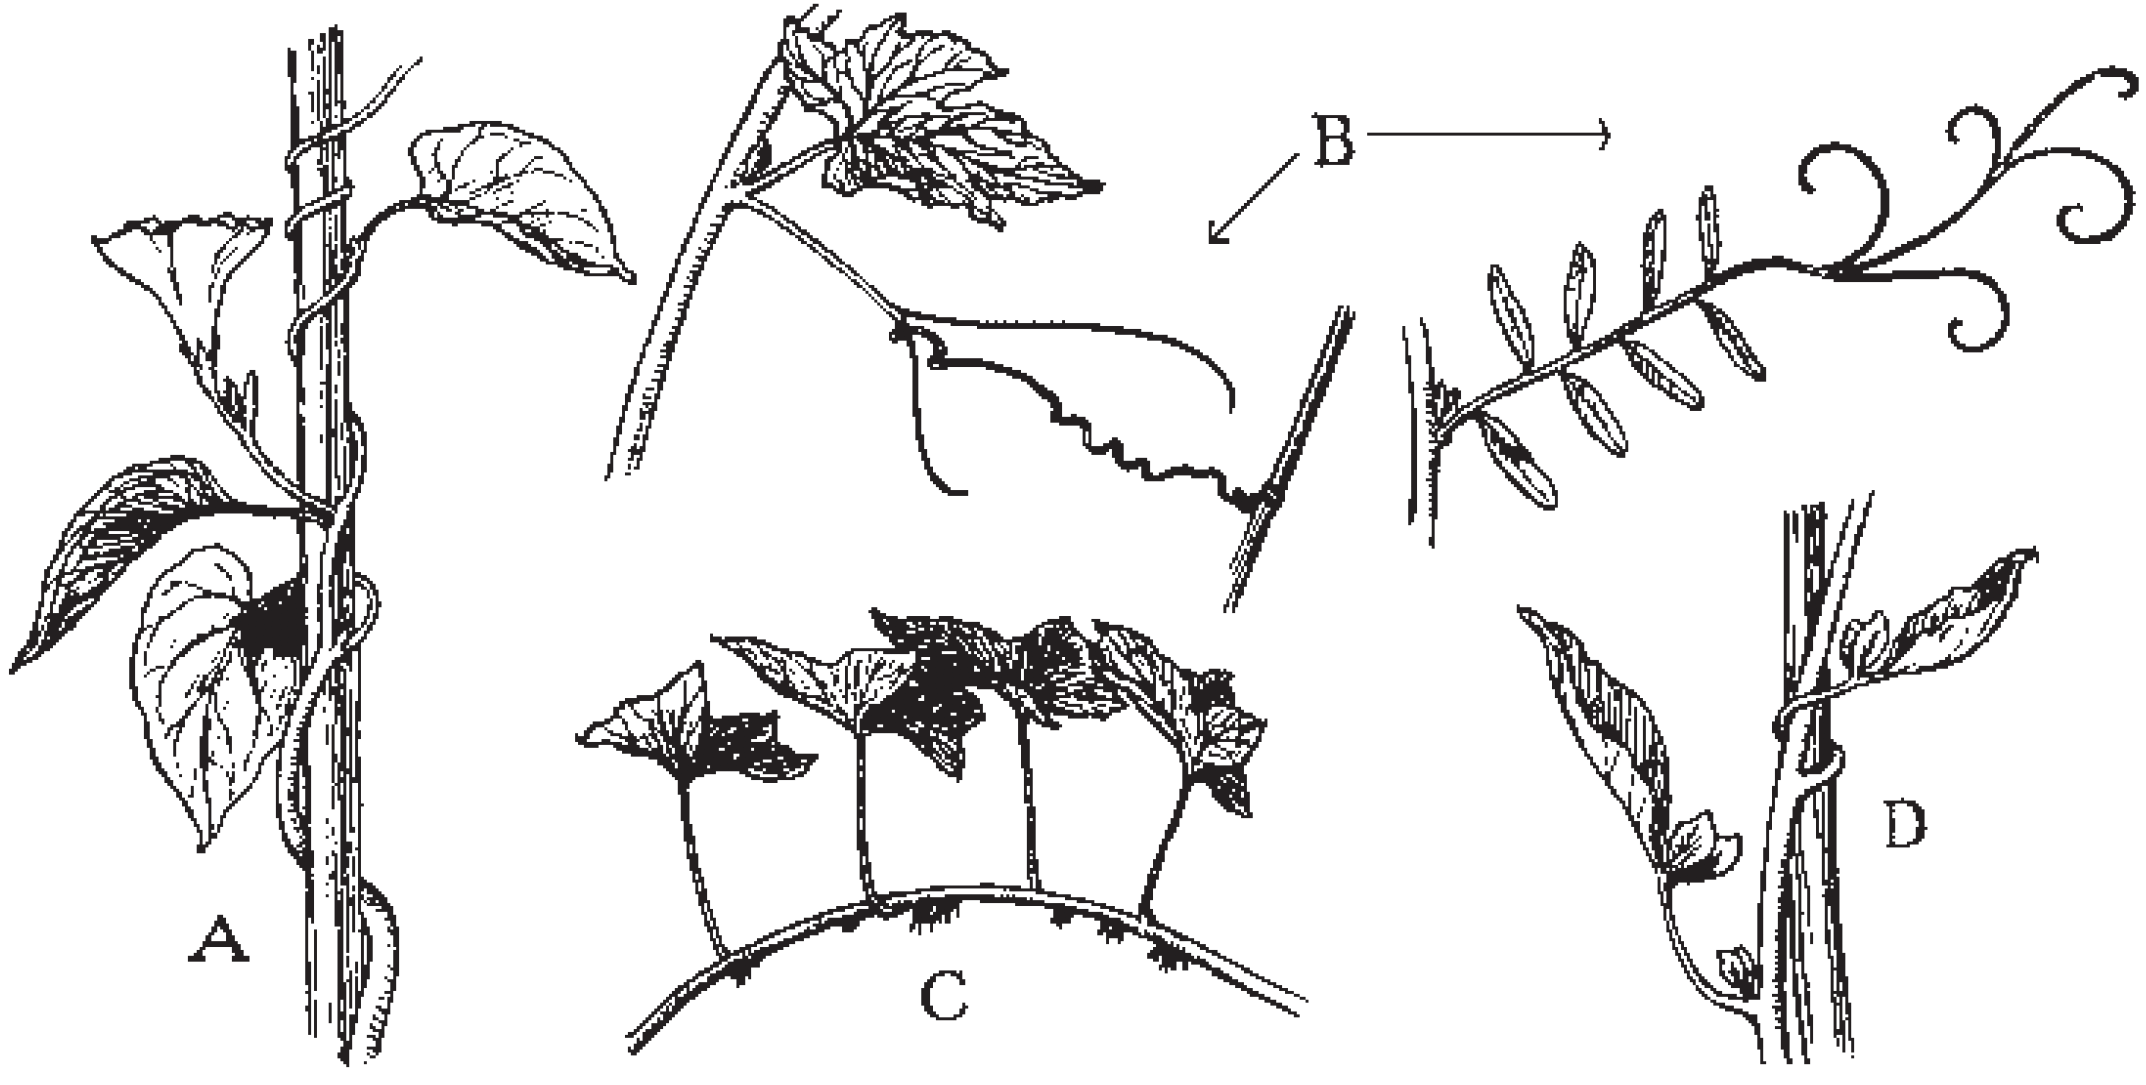 Illustration of how plants climb, keyed to the caption